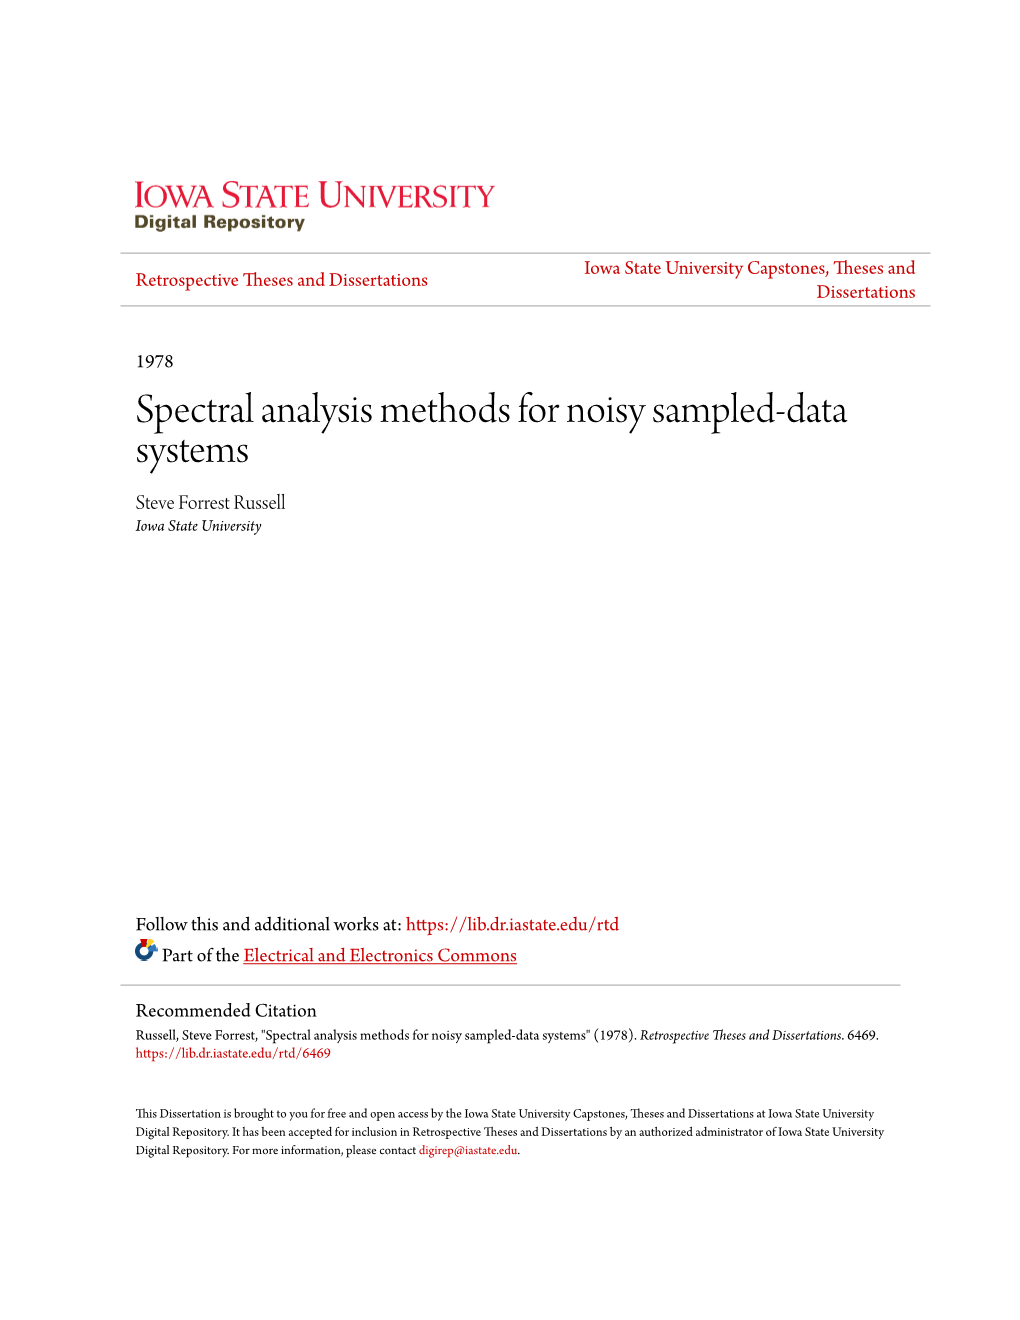 Spectral Analysis Methods for Noisy Sampled-Data Systems Steve Forrest Russell Iowa State University